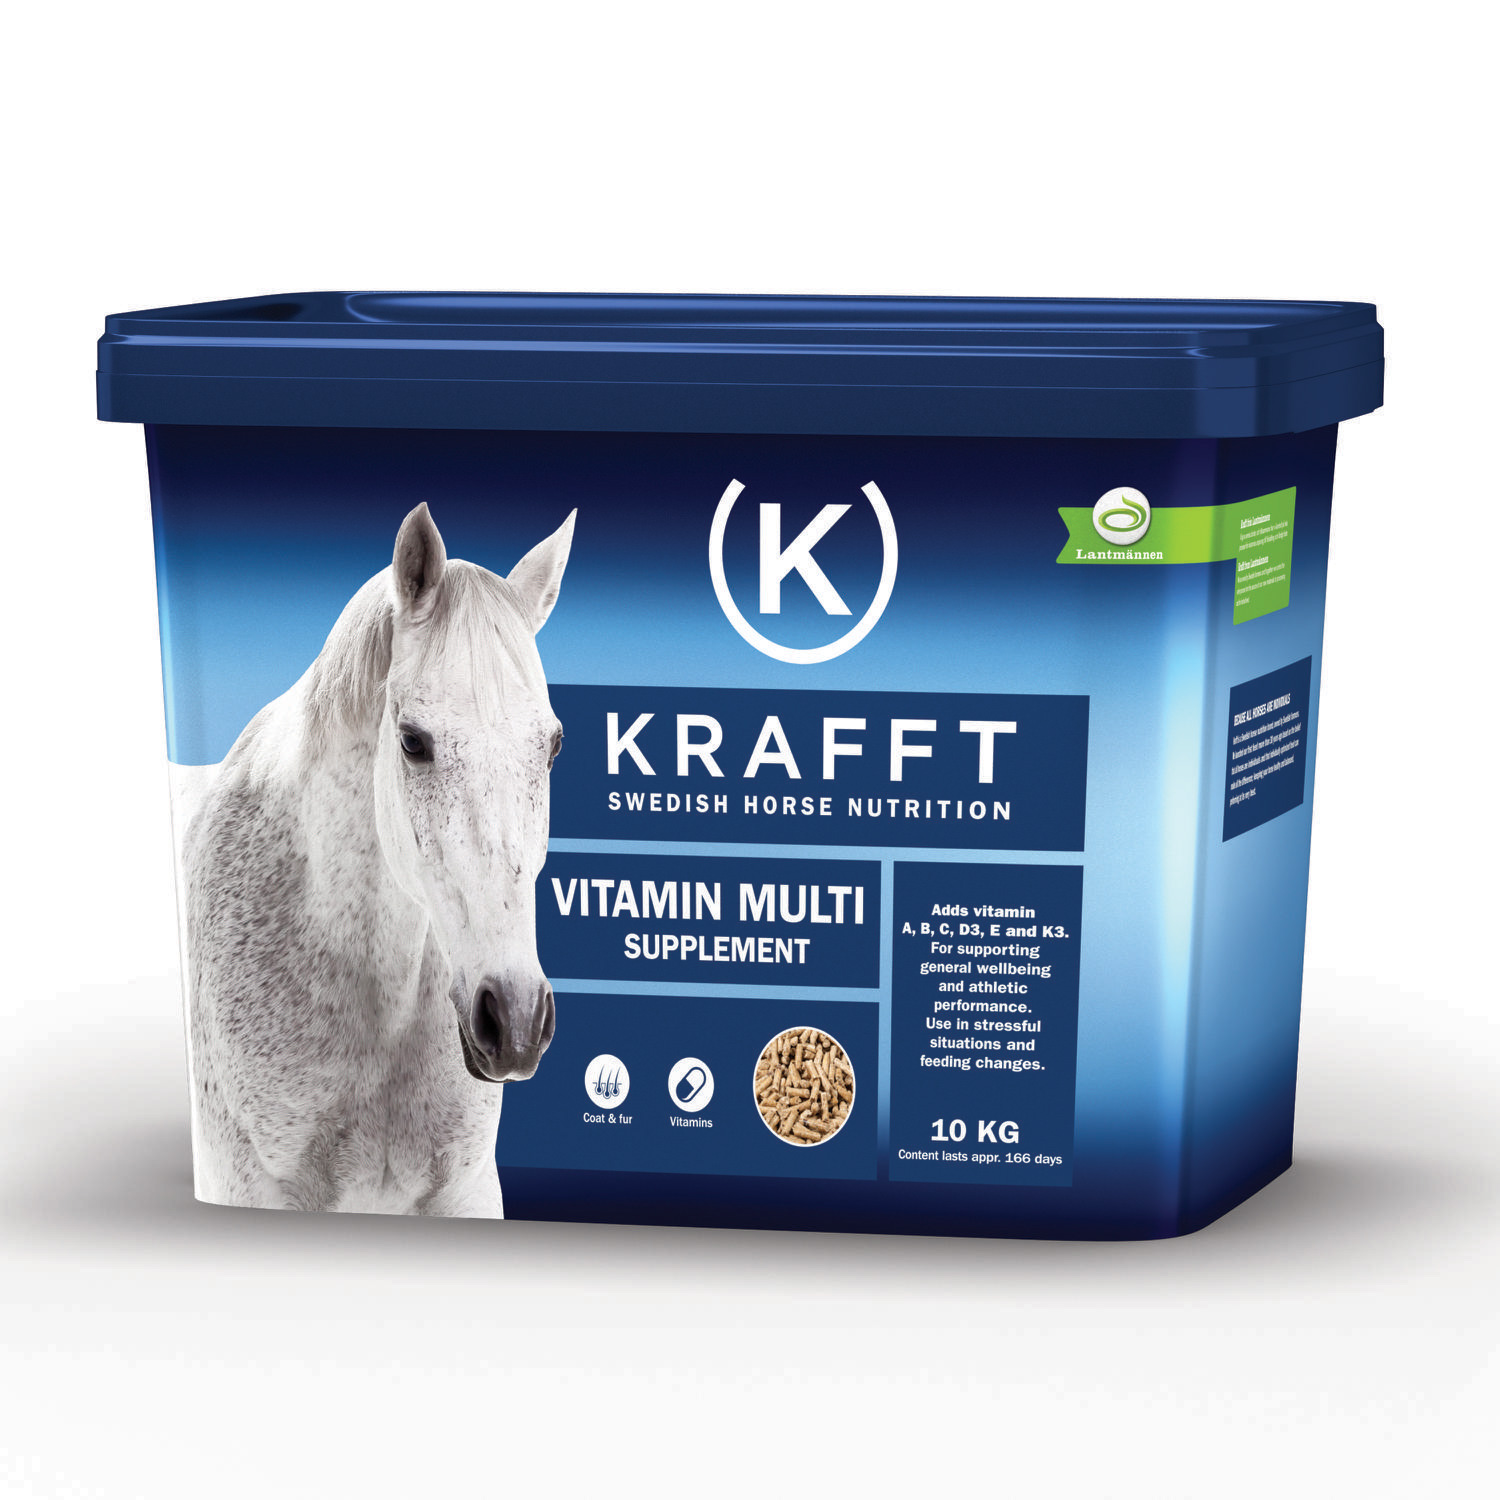 Krafft vitamin multi 10 kg